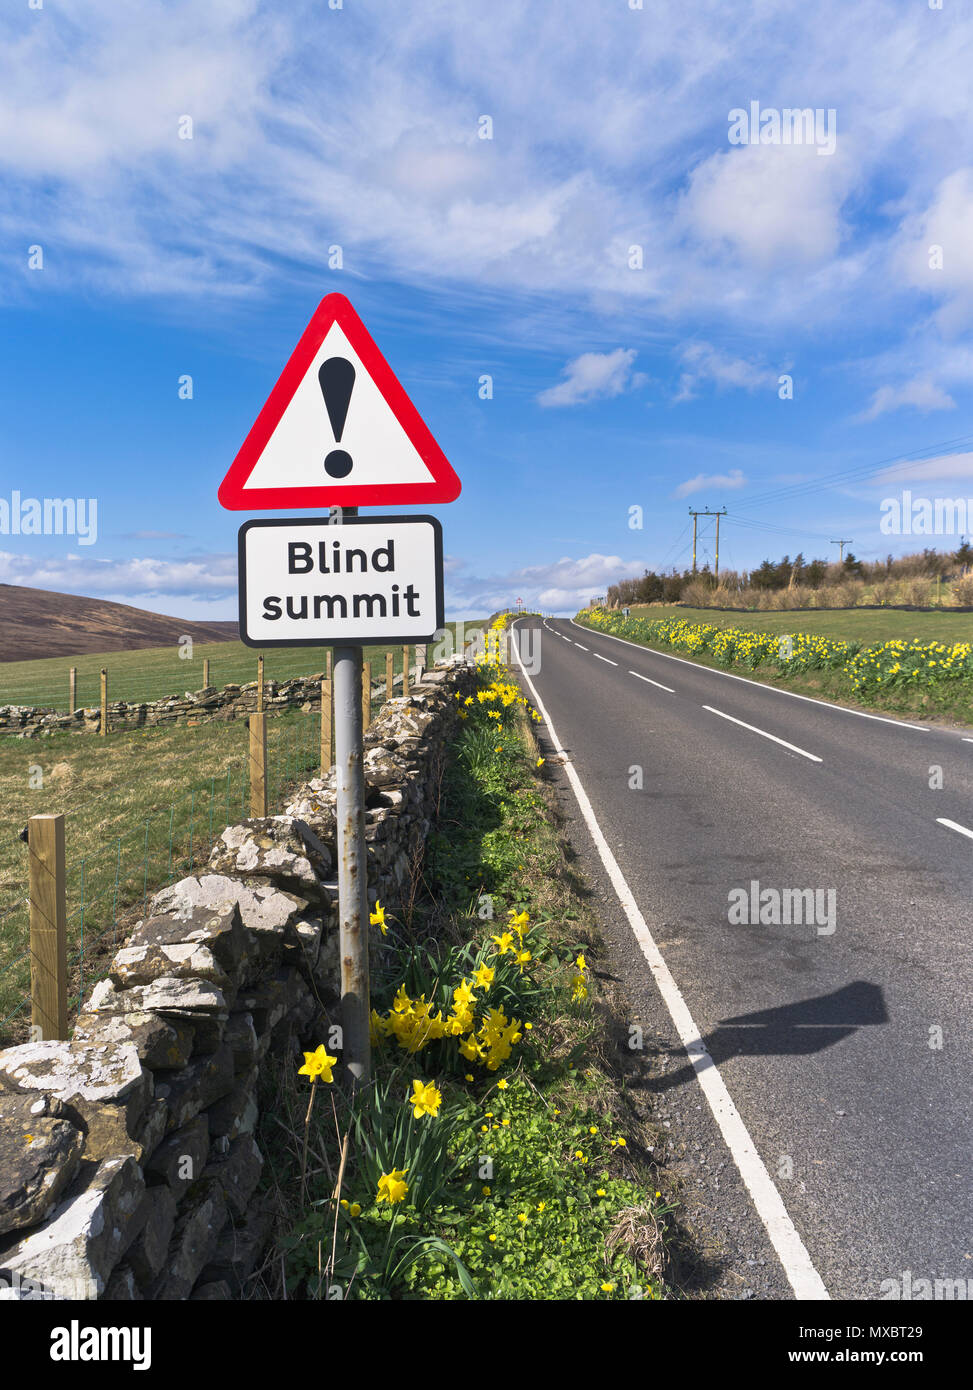 dh Blind Summit ROAD ORKNEY Rouge Triangle avertissement signalisation route vide Ecosse panneaux Banque D'Images